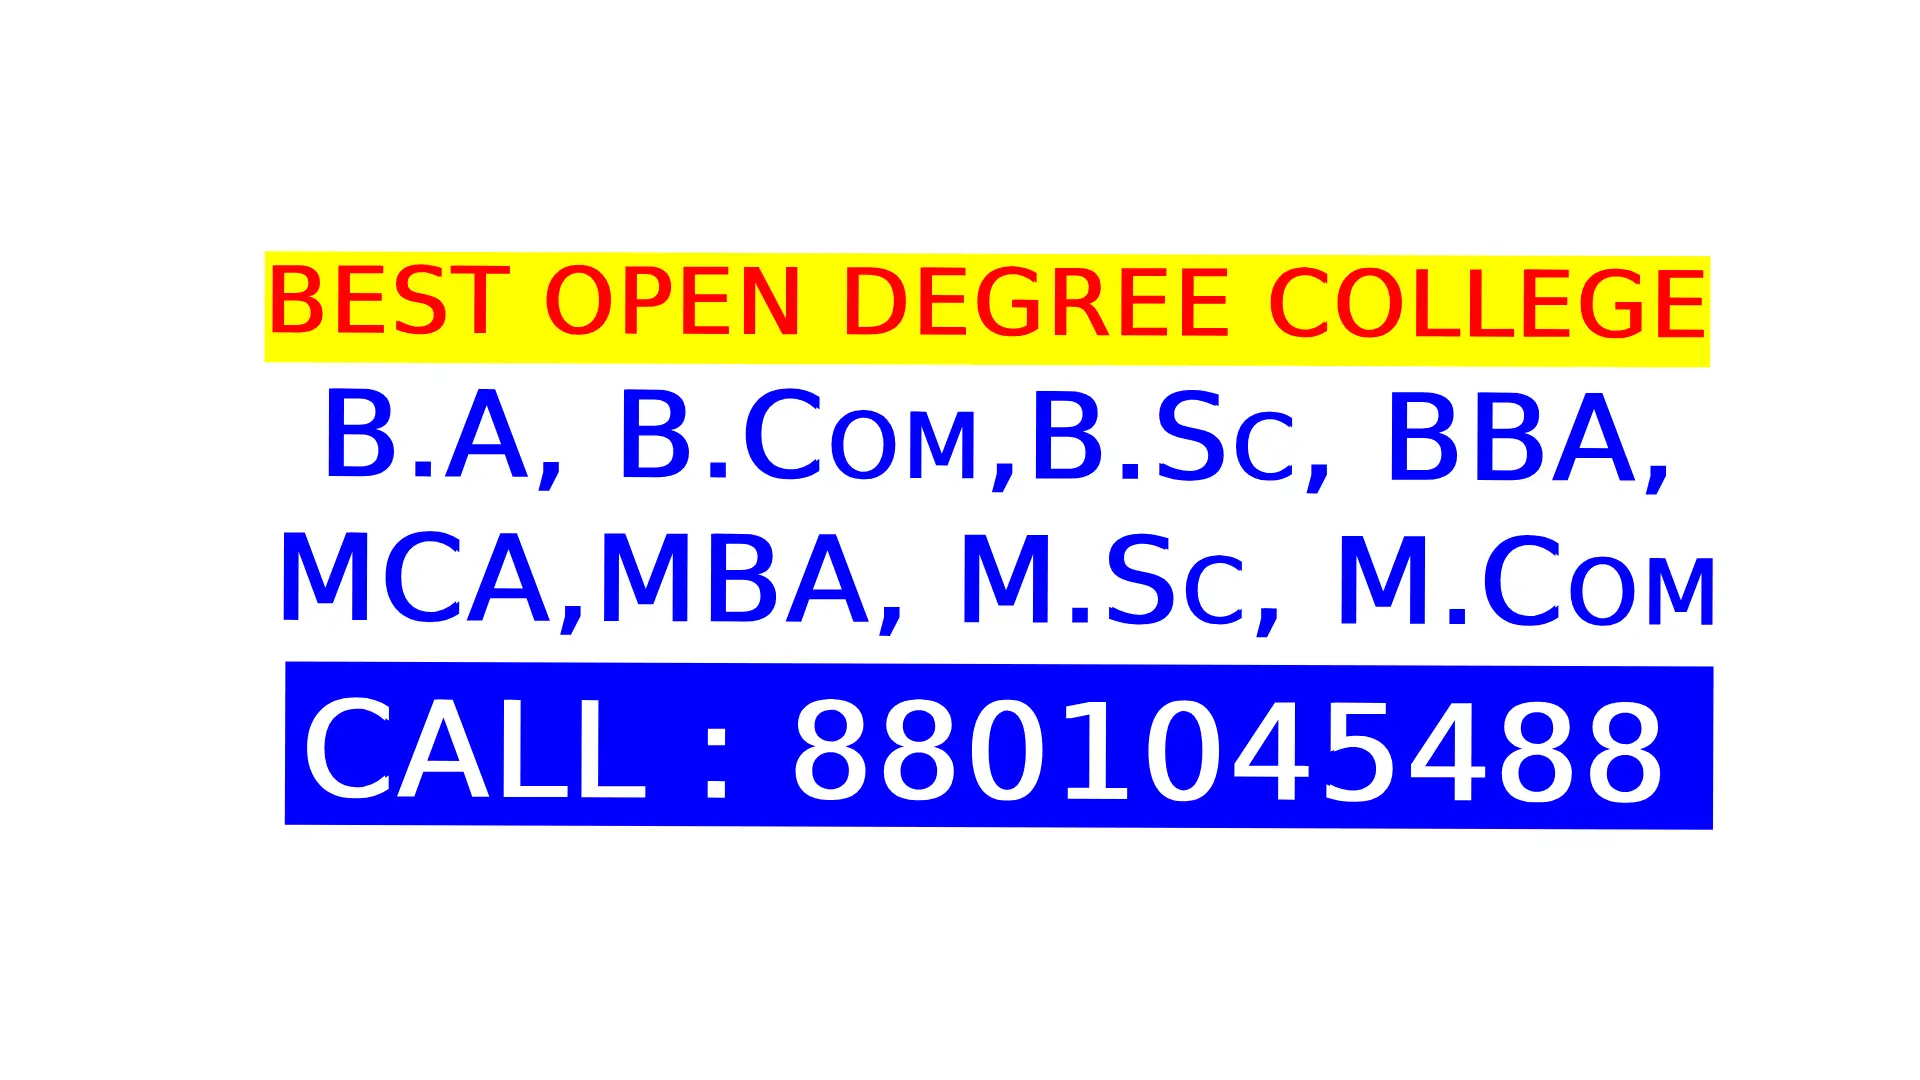 Best Open Degree College in Hyderabad Call 8801045488